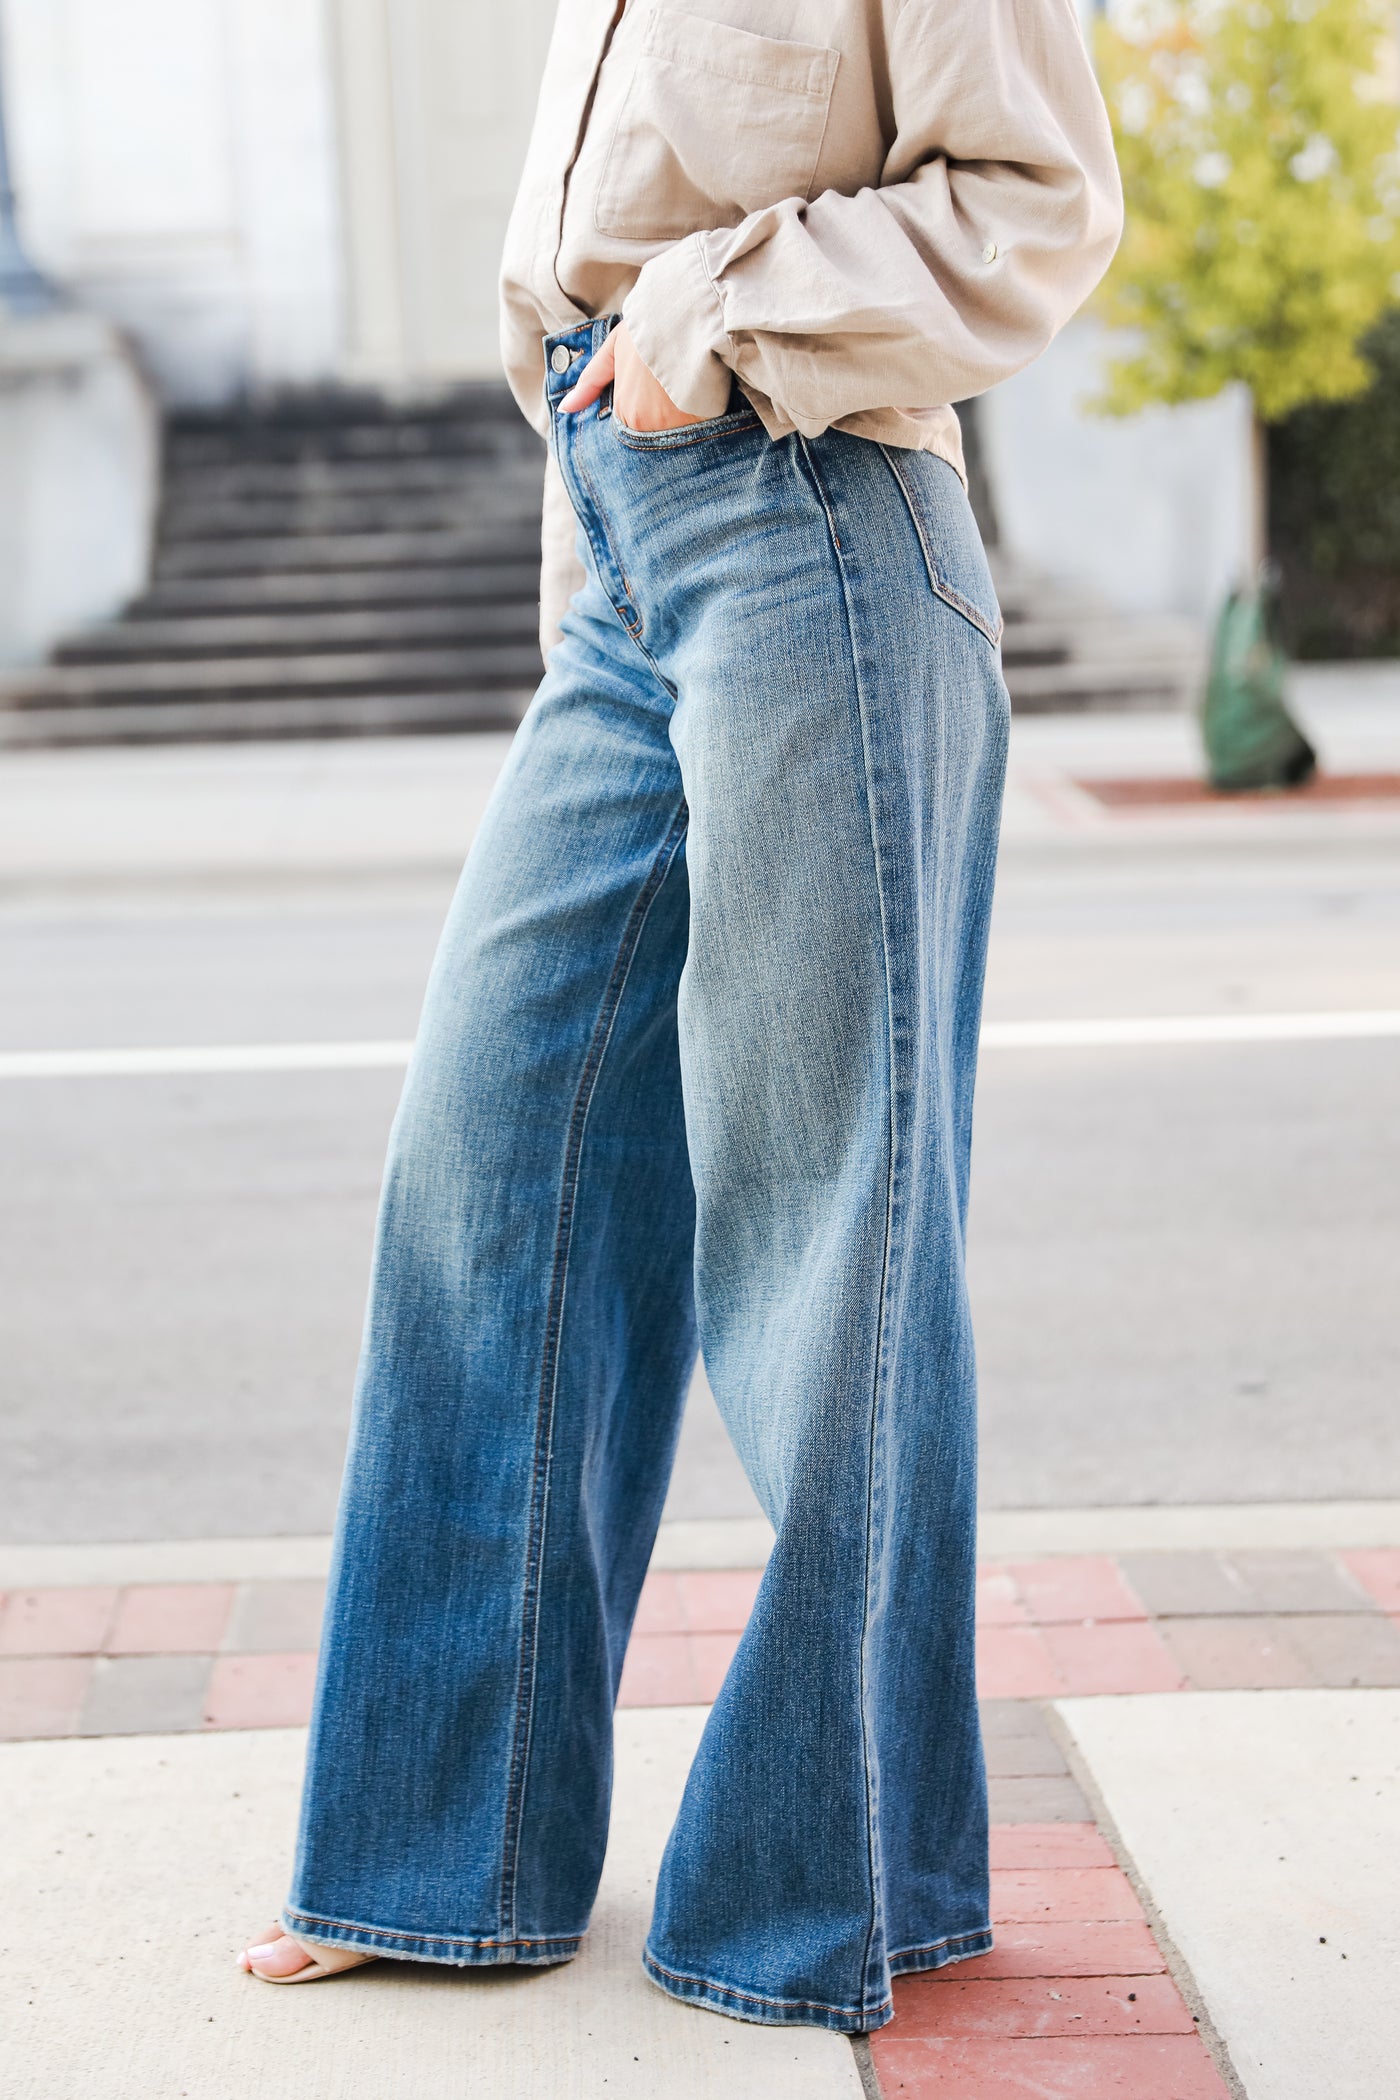 – ShopDressUp Medium Dress Up | Wide Leg Jeans Trendy Wash